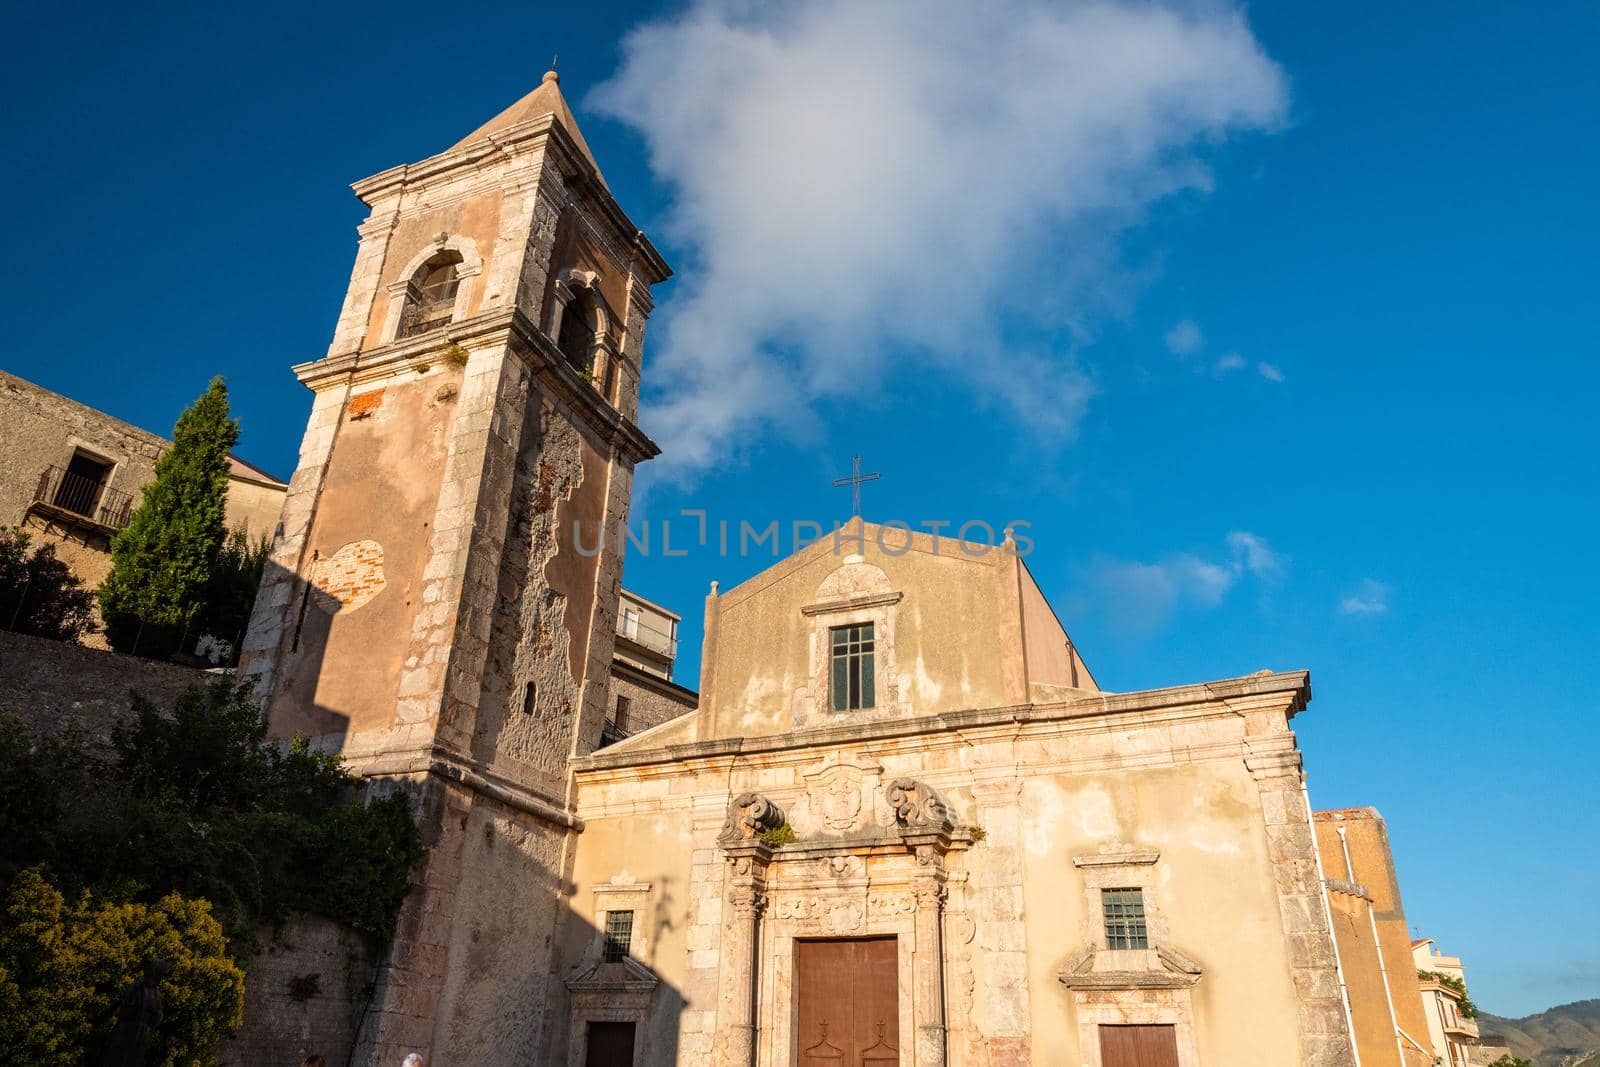 Church of the Aracoeli in San Marco d'Alunzio in Sicily, Italy by mauricallari